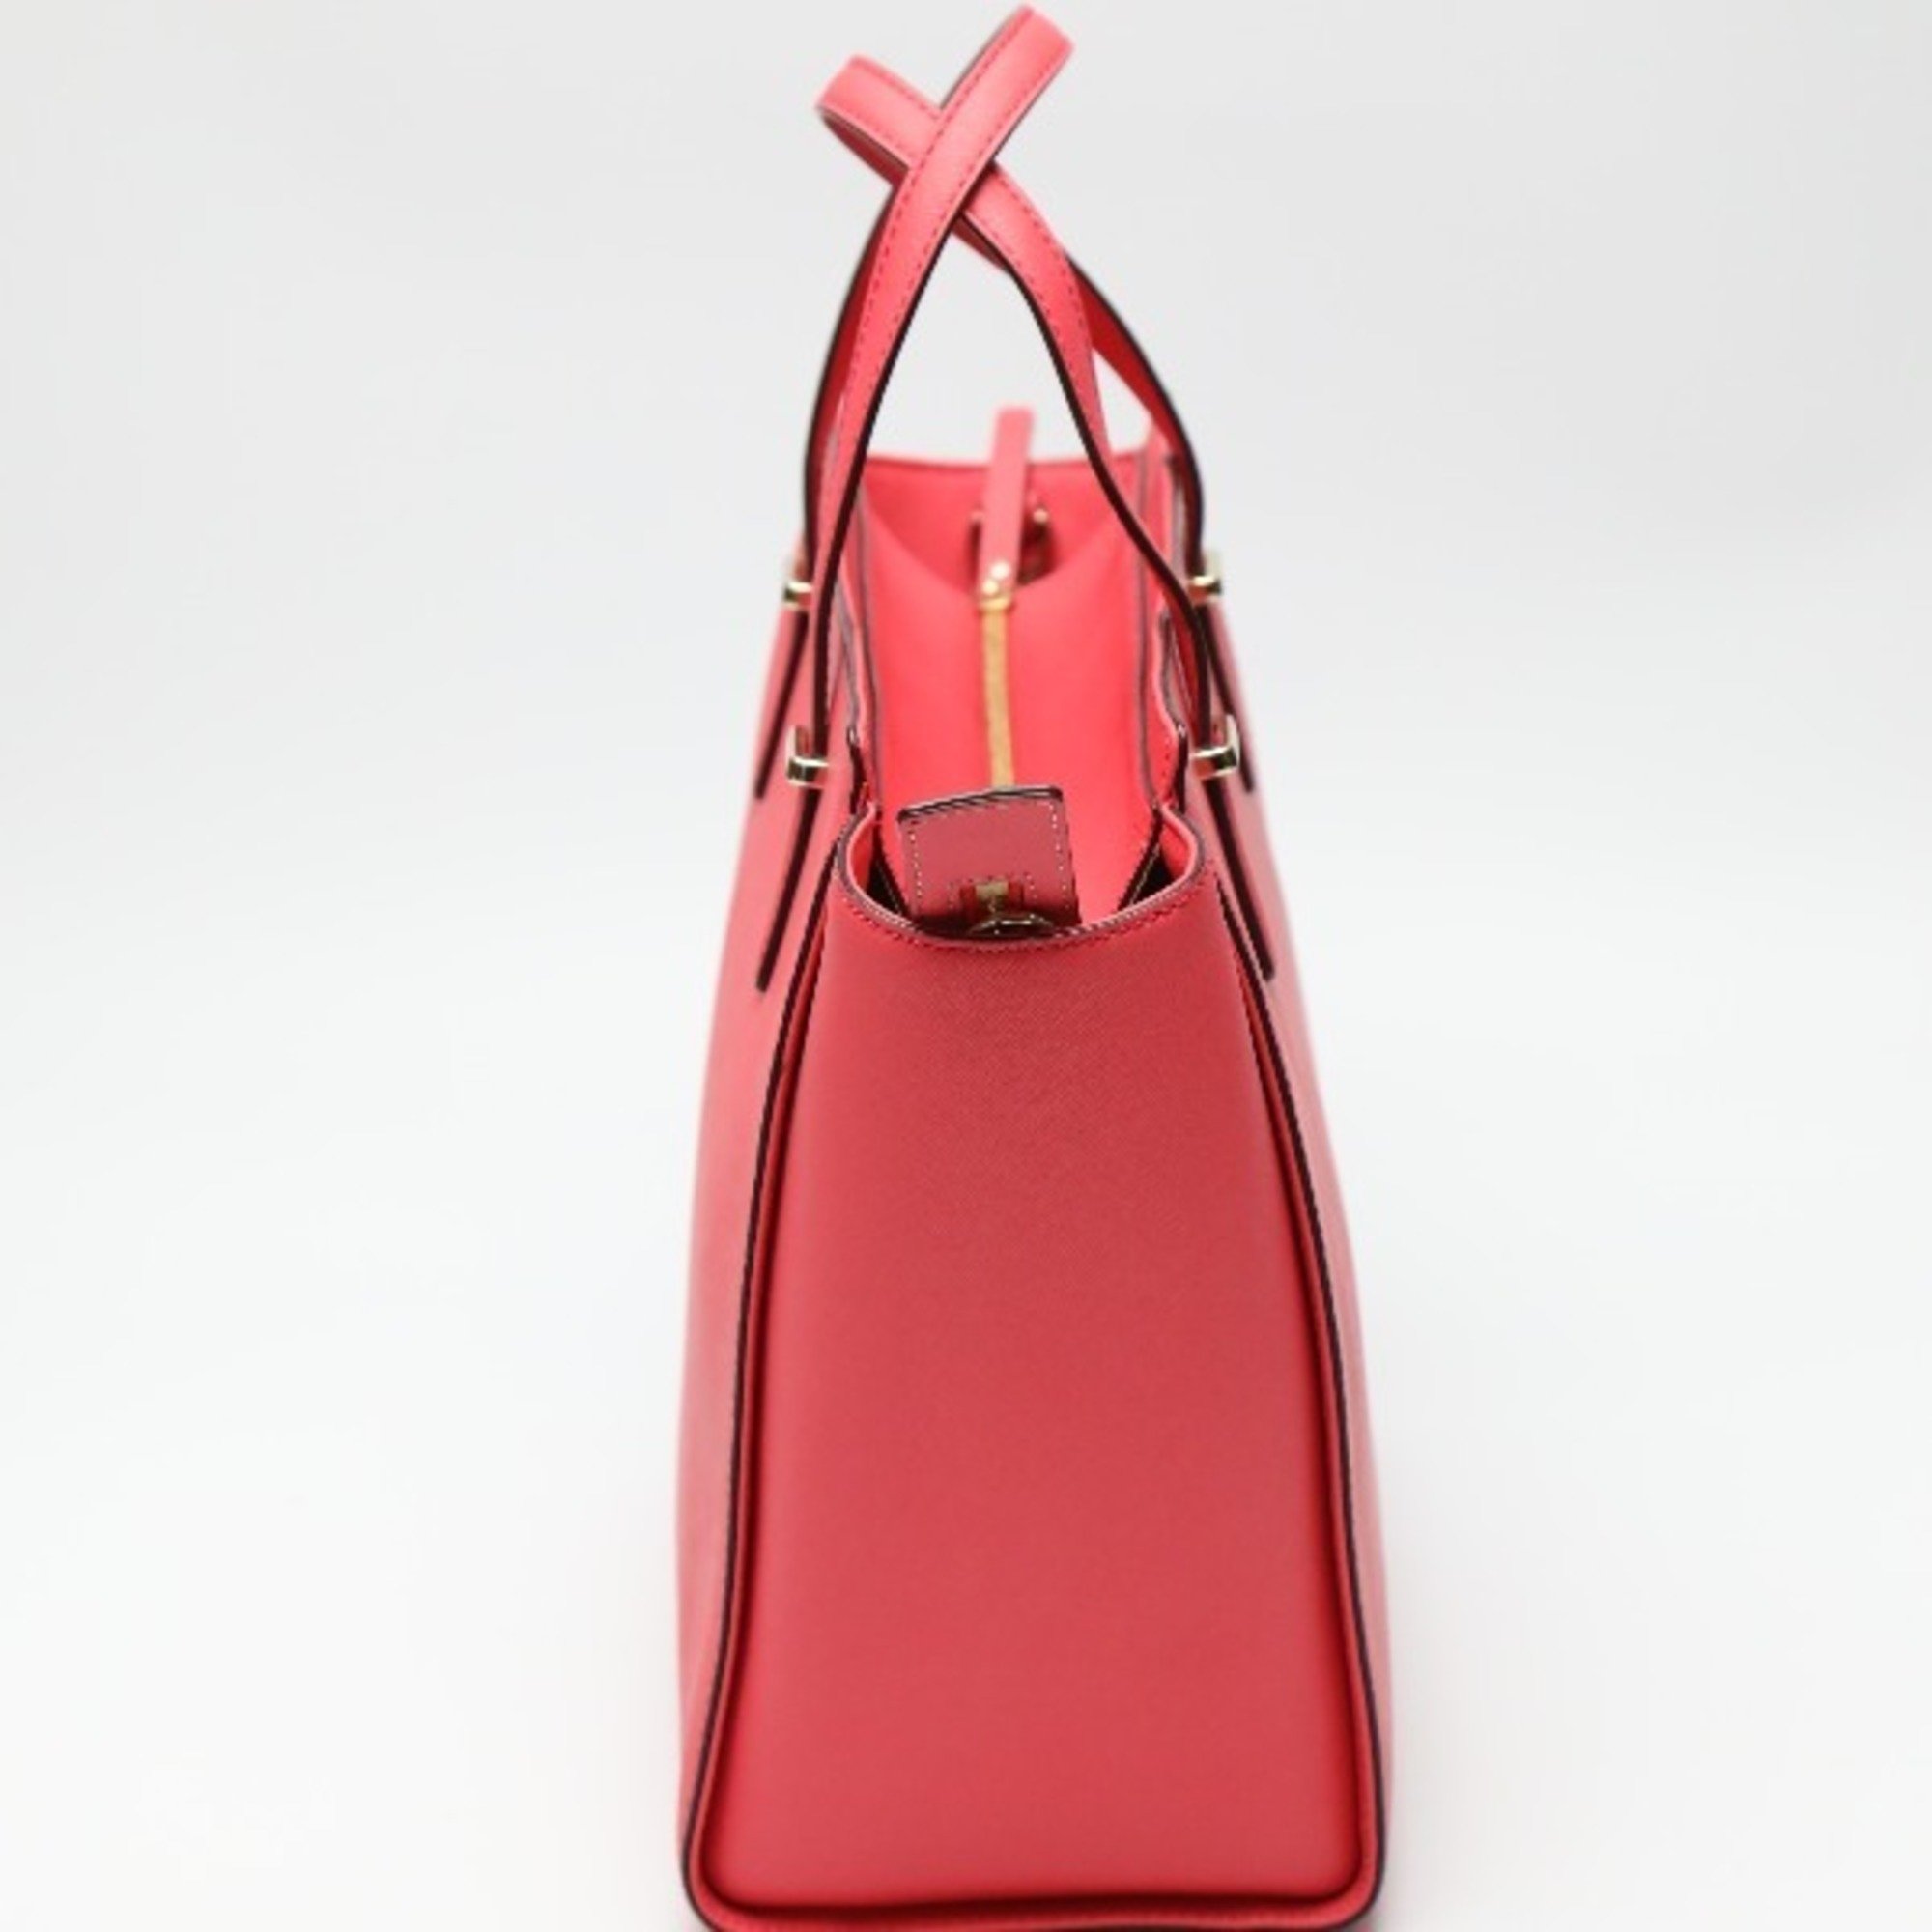 Kate Spade 2WAY Tote Bag Shoulder Pink Handbag